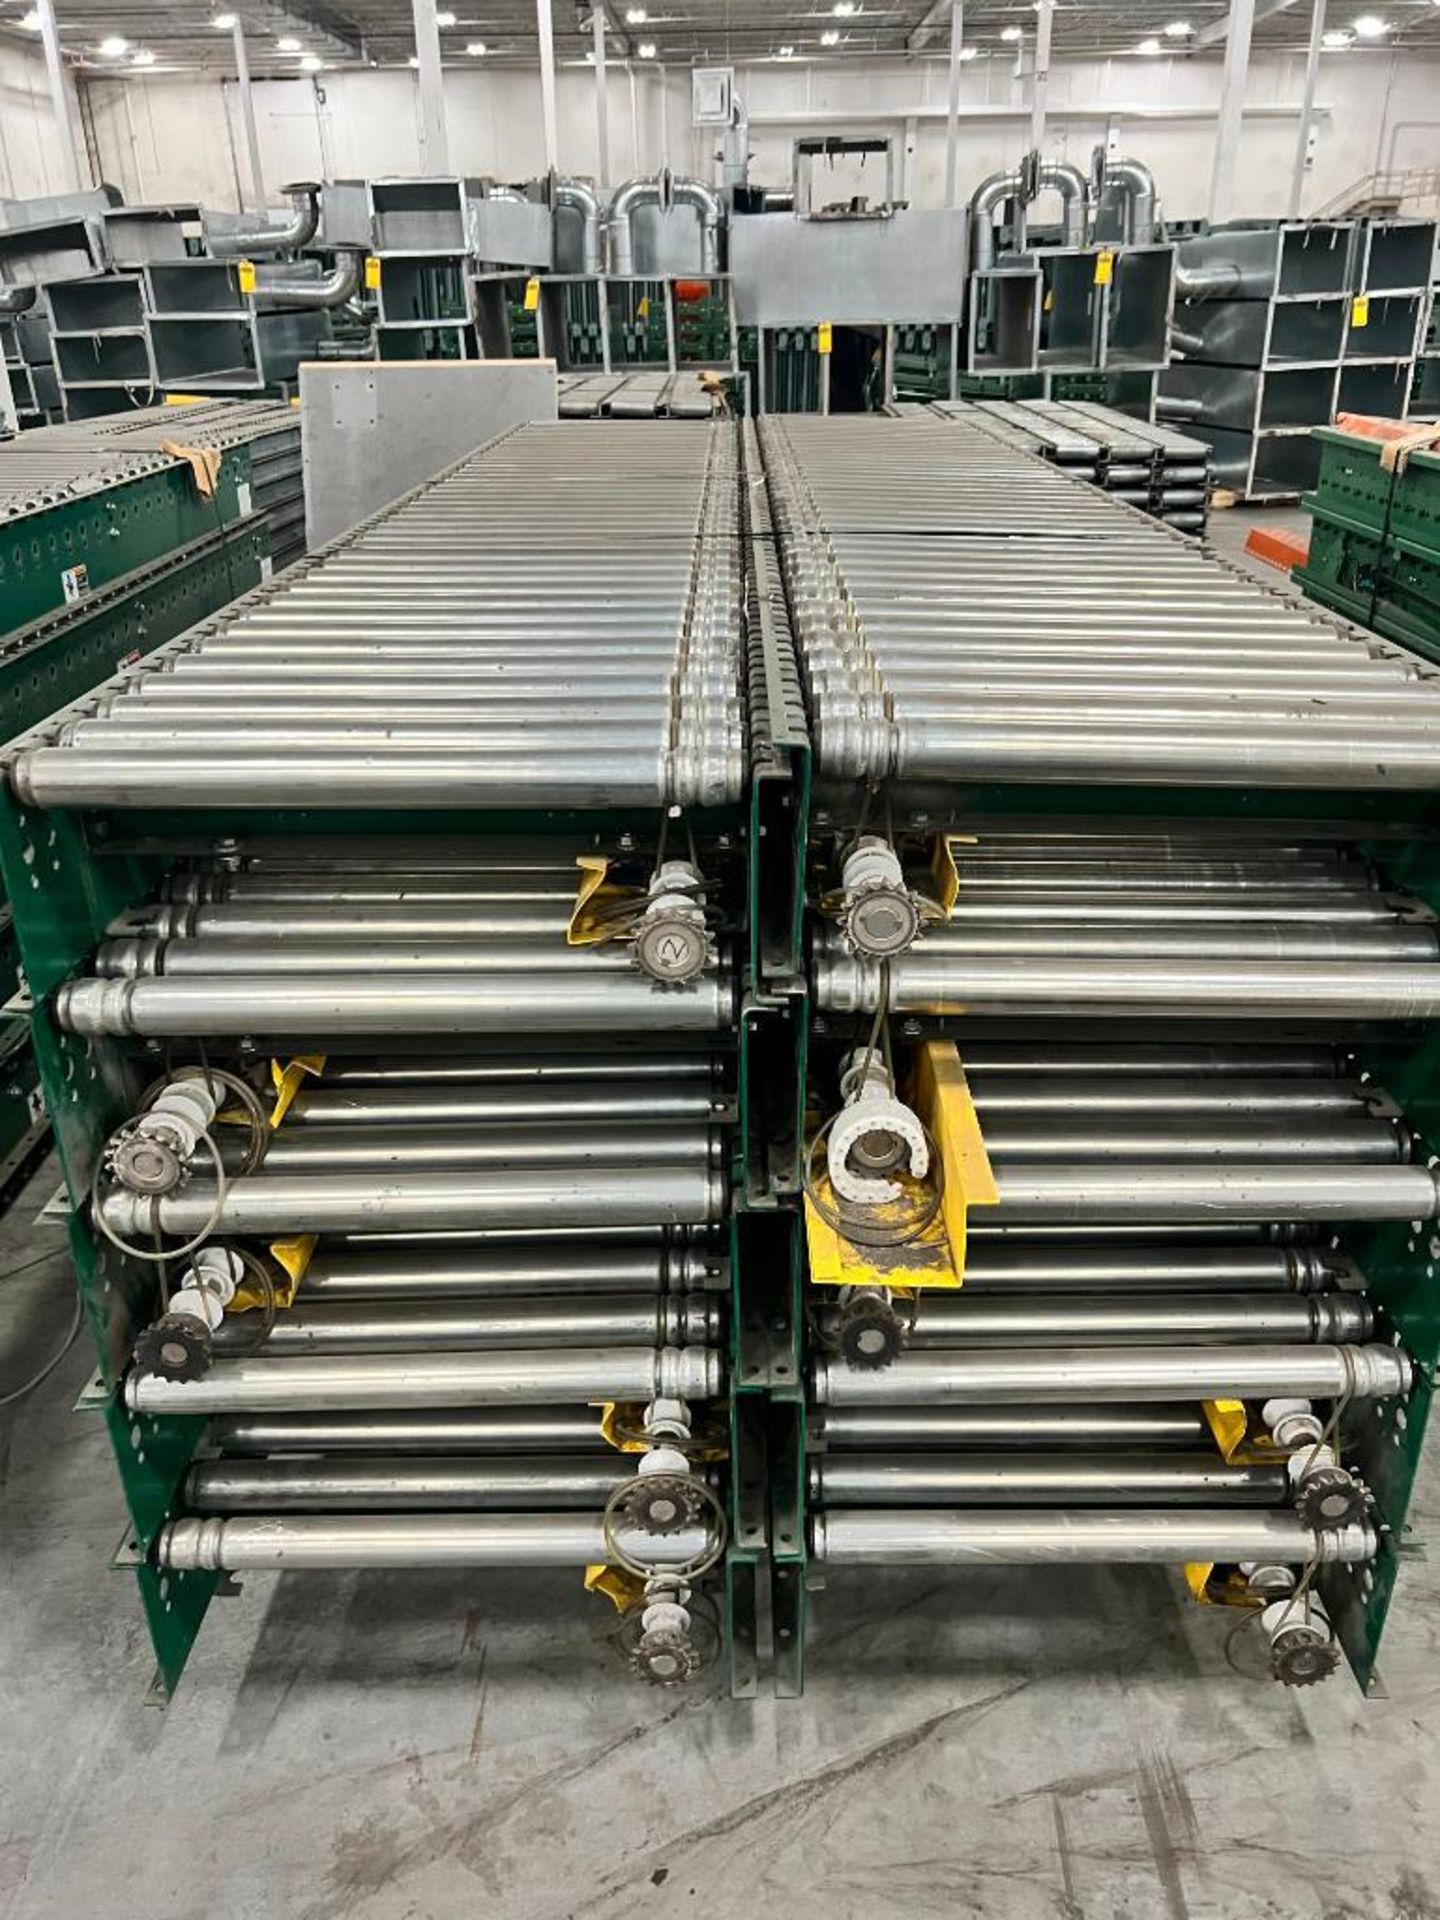 (30x) Rapistan Demag Automatic Pressure Roller Conveyors, 21-1/2" x 10' - Image 2 of 4